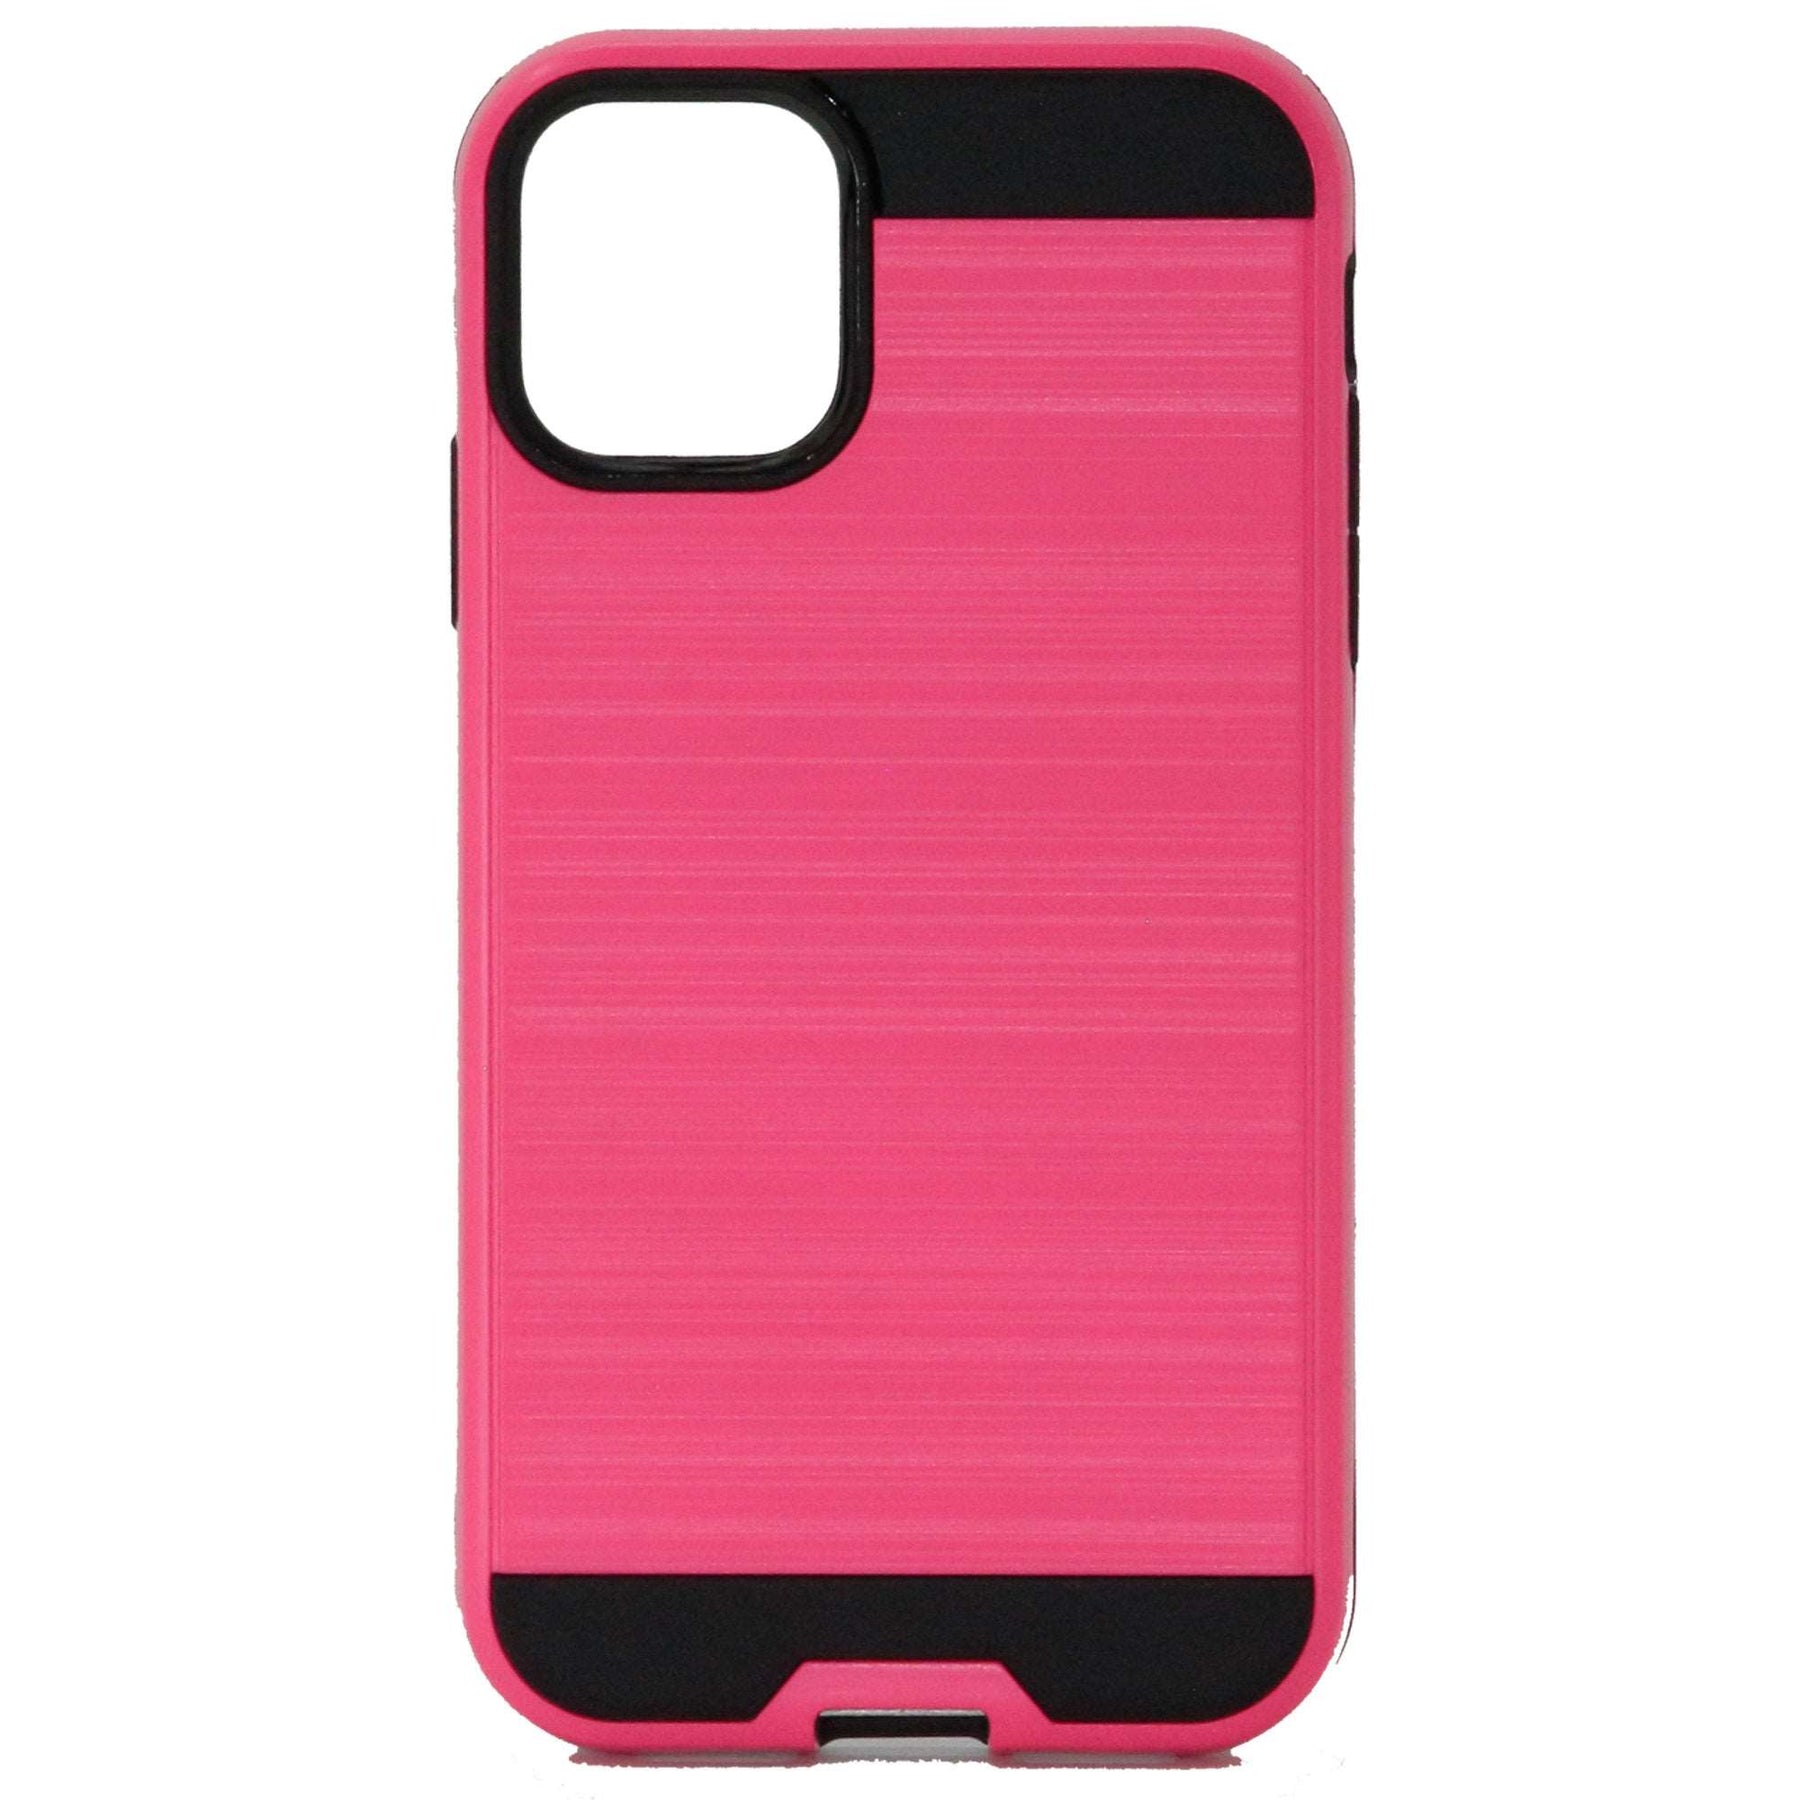 Apple iPhone 12 Pro Max Slim Armor Case Pink